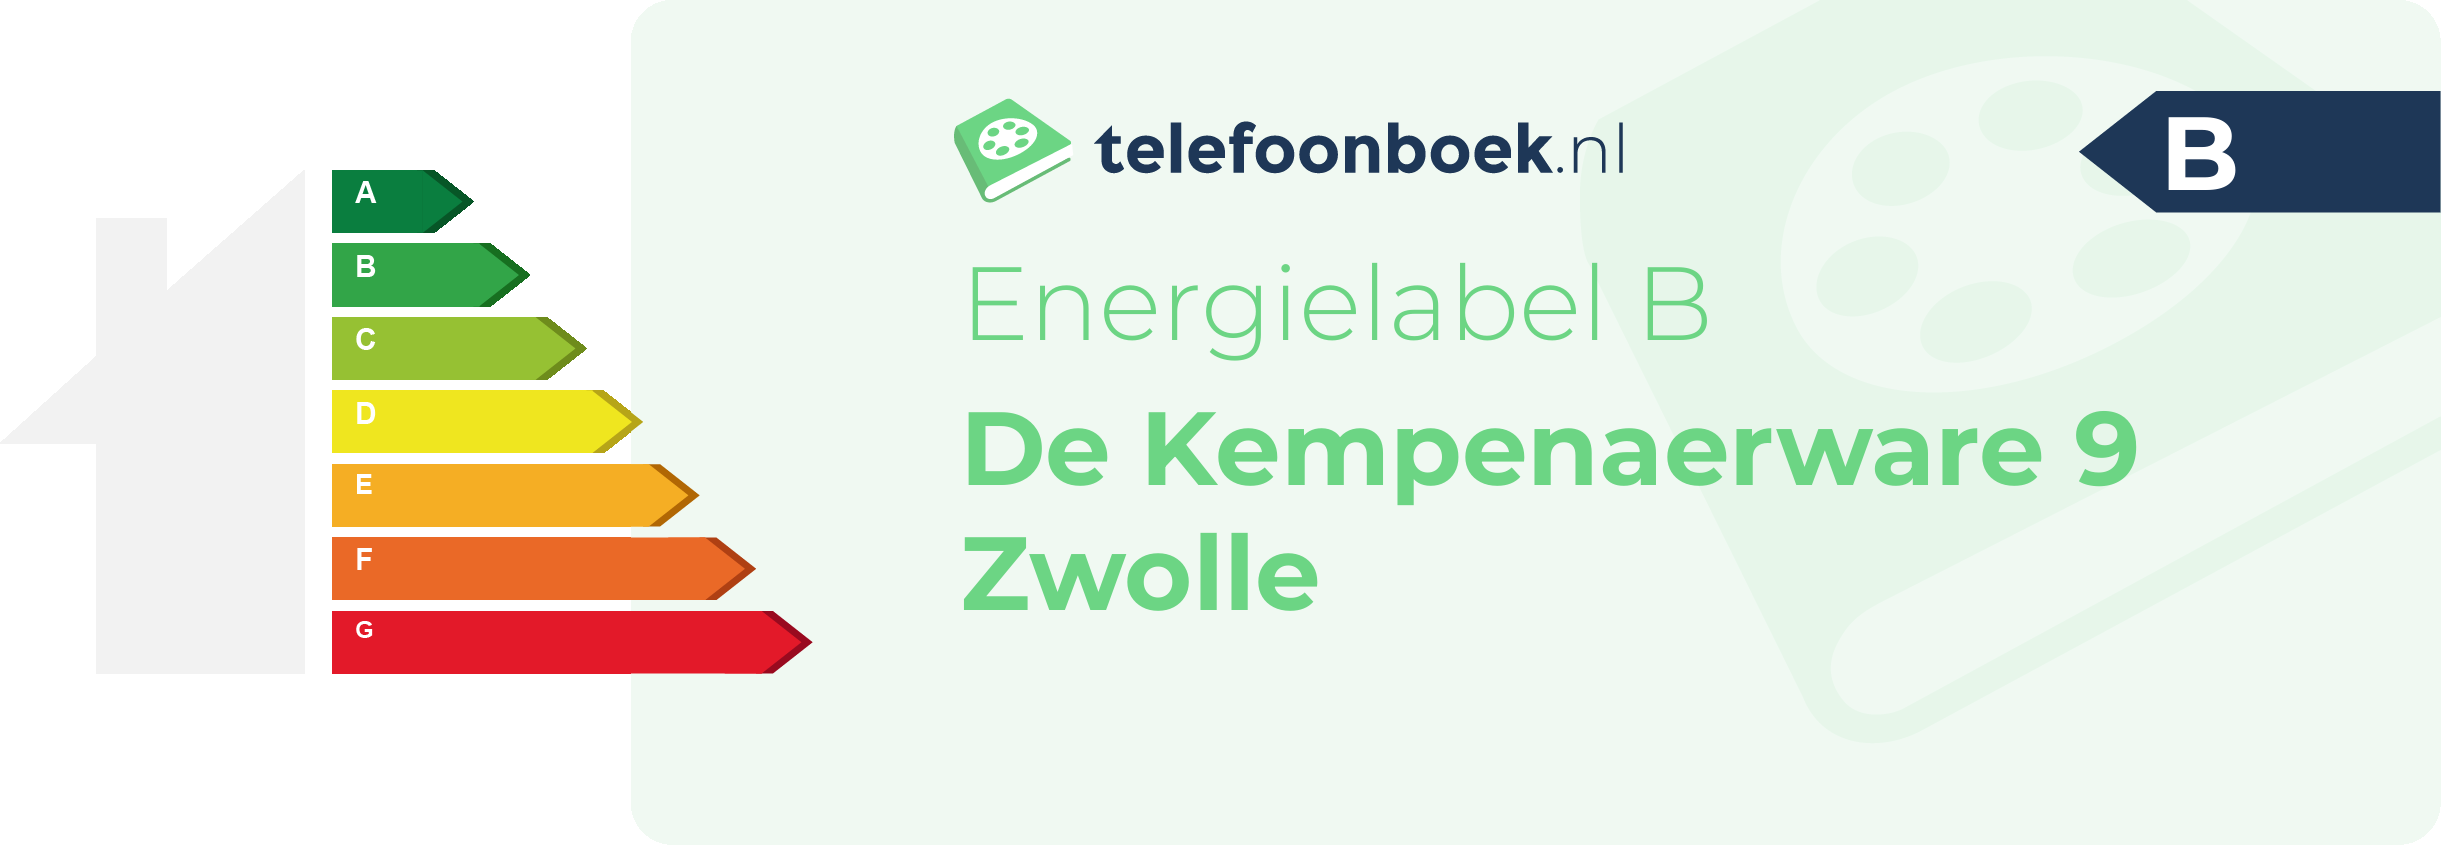 Energielabel De Kempenaerware 9 Zwolle